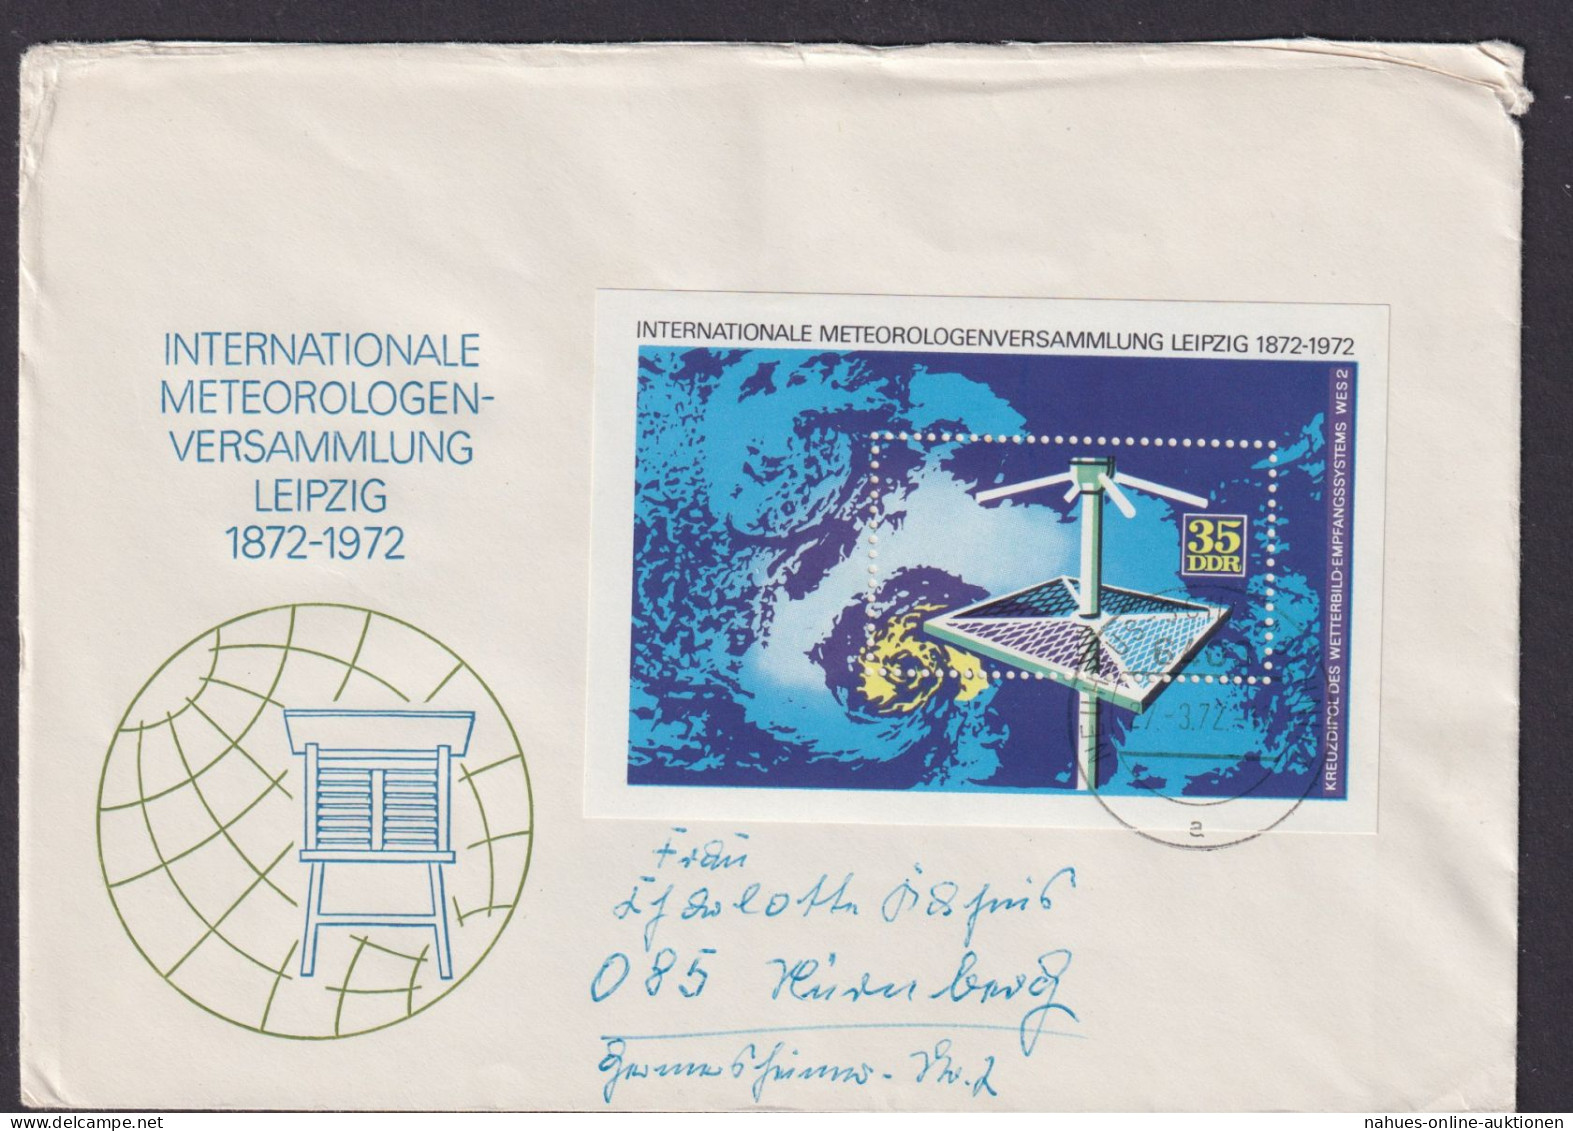 DDR Brief EF Block 35 Meterologen Wetter Neuhaus Schierschnitz Nürnberg - Storia Postale